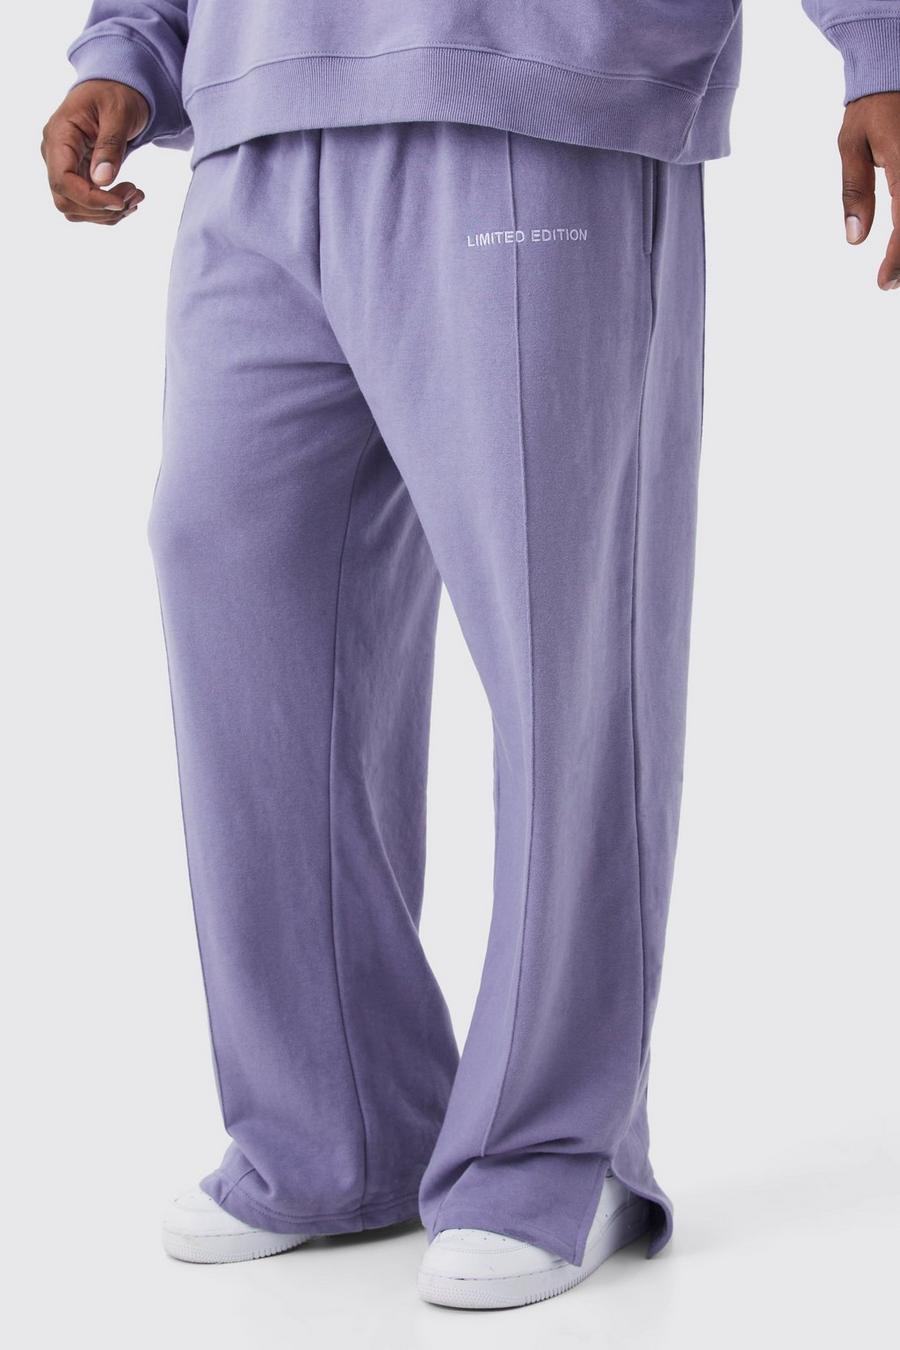 Pantaloni tuta pesanti Plus Size rilassati con spacco sul fondo, Lavender image number 1